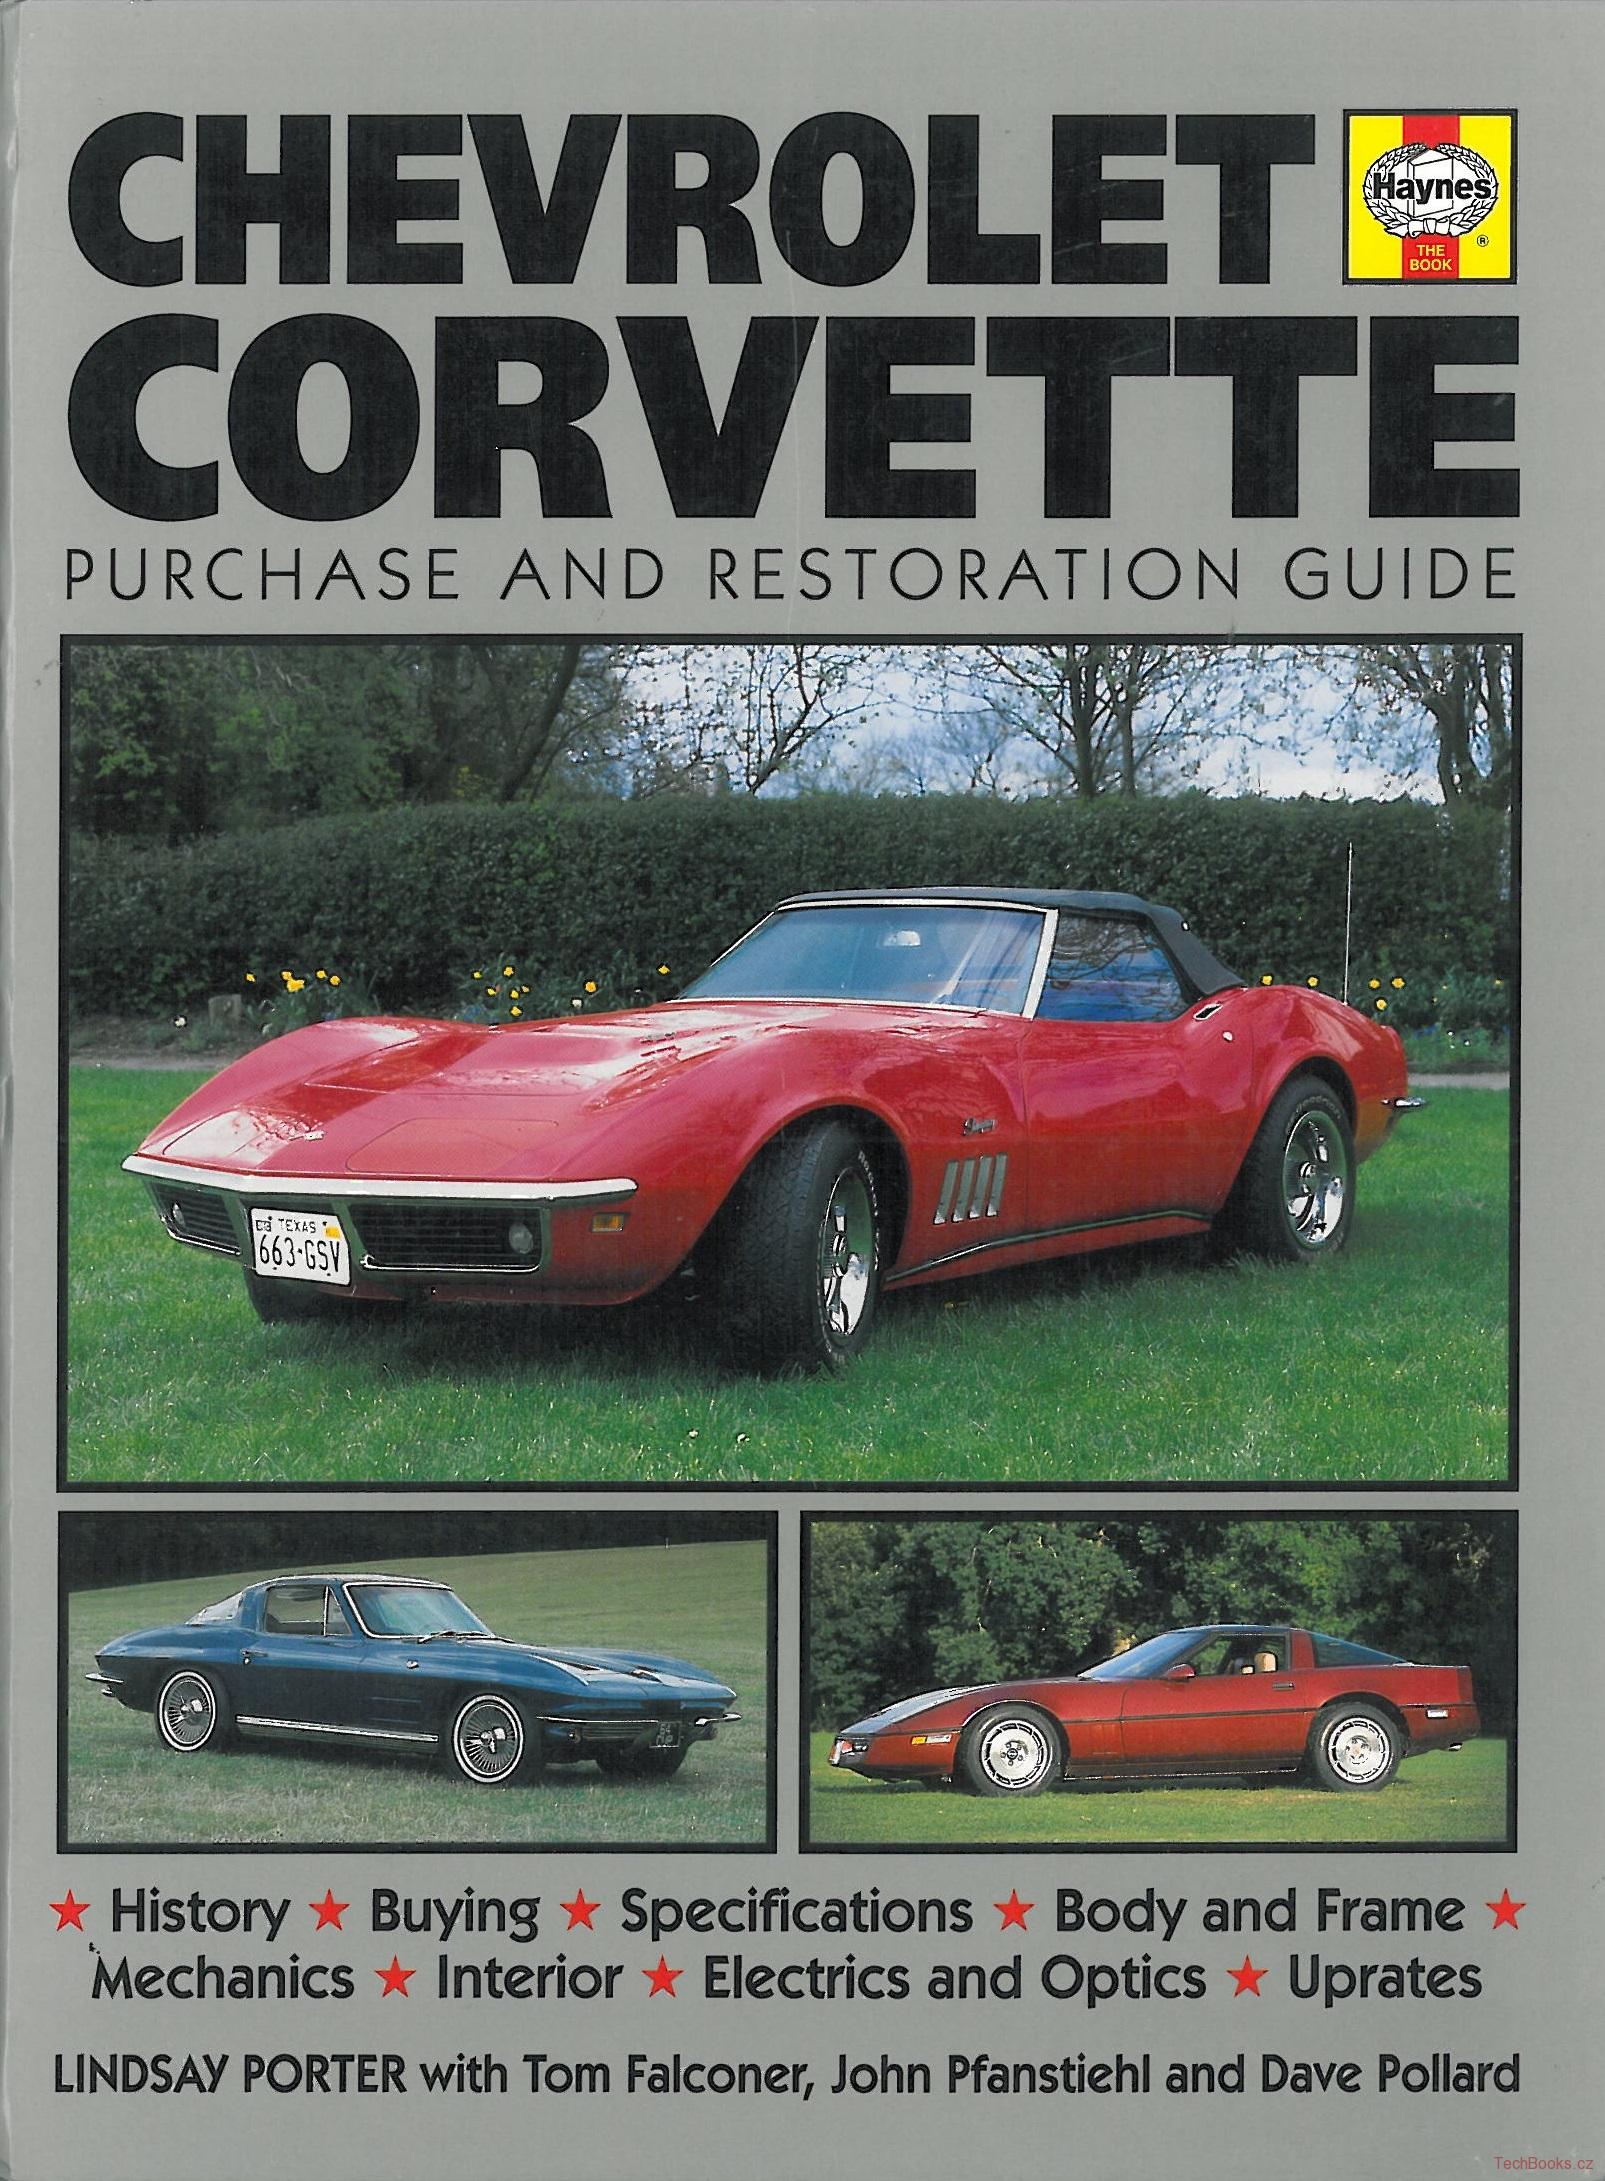 Chevrolet Corvette Purchase and Restoration Guide